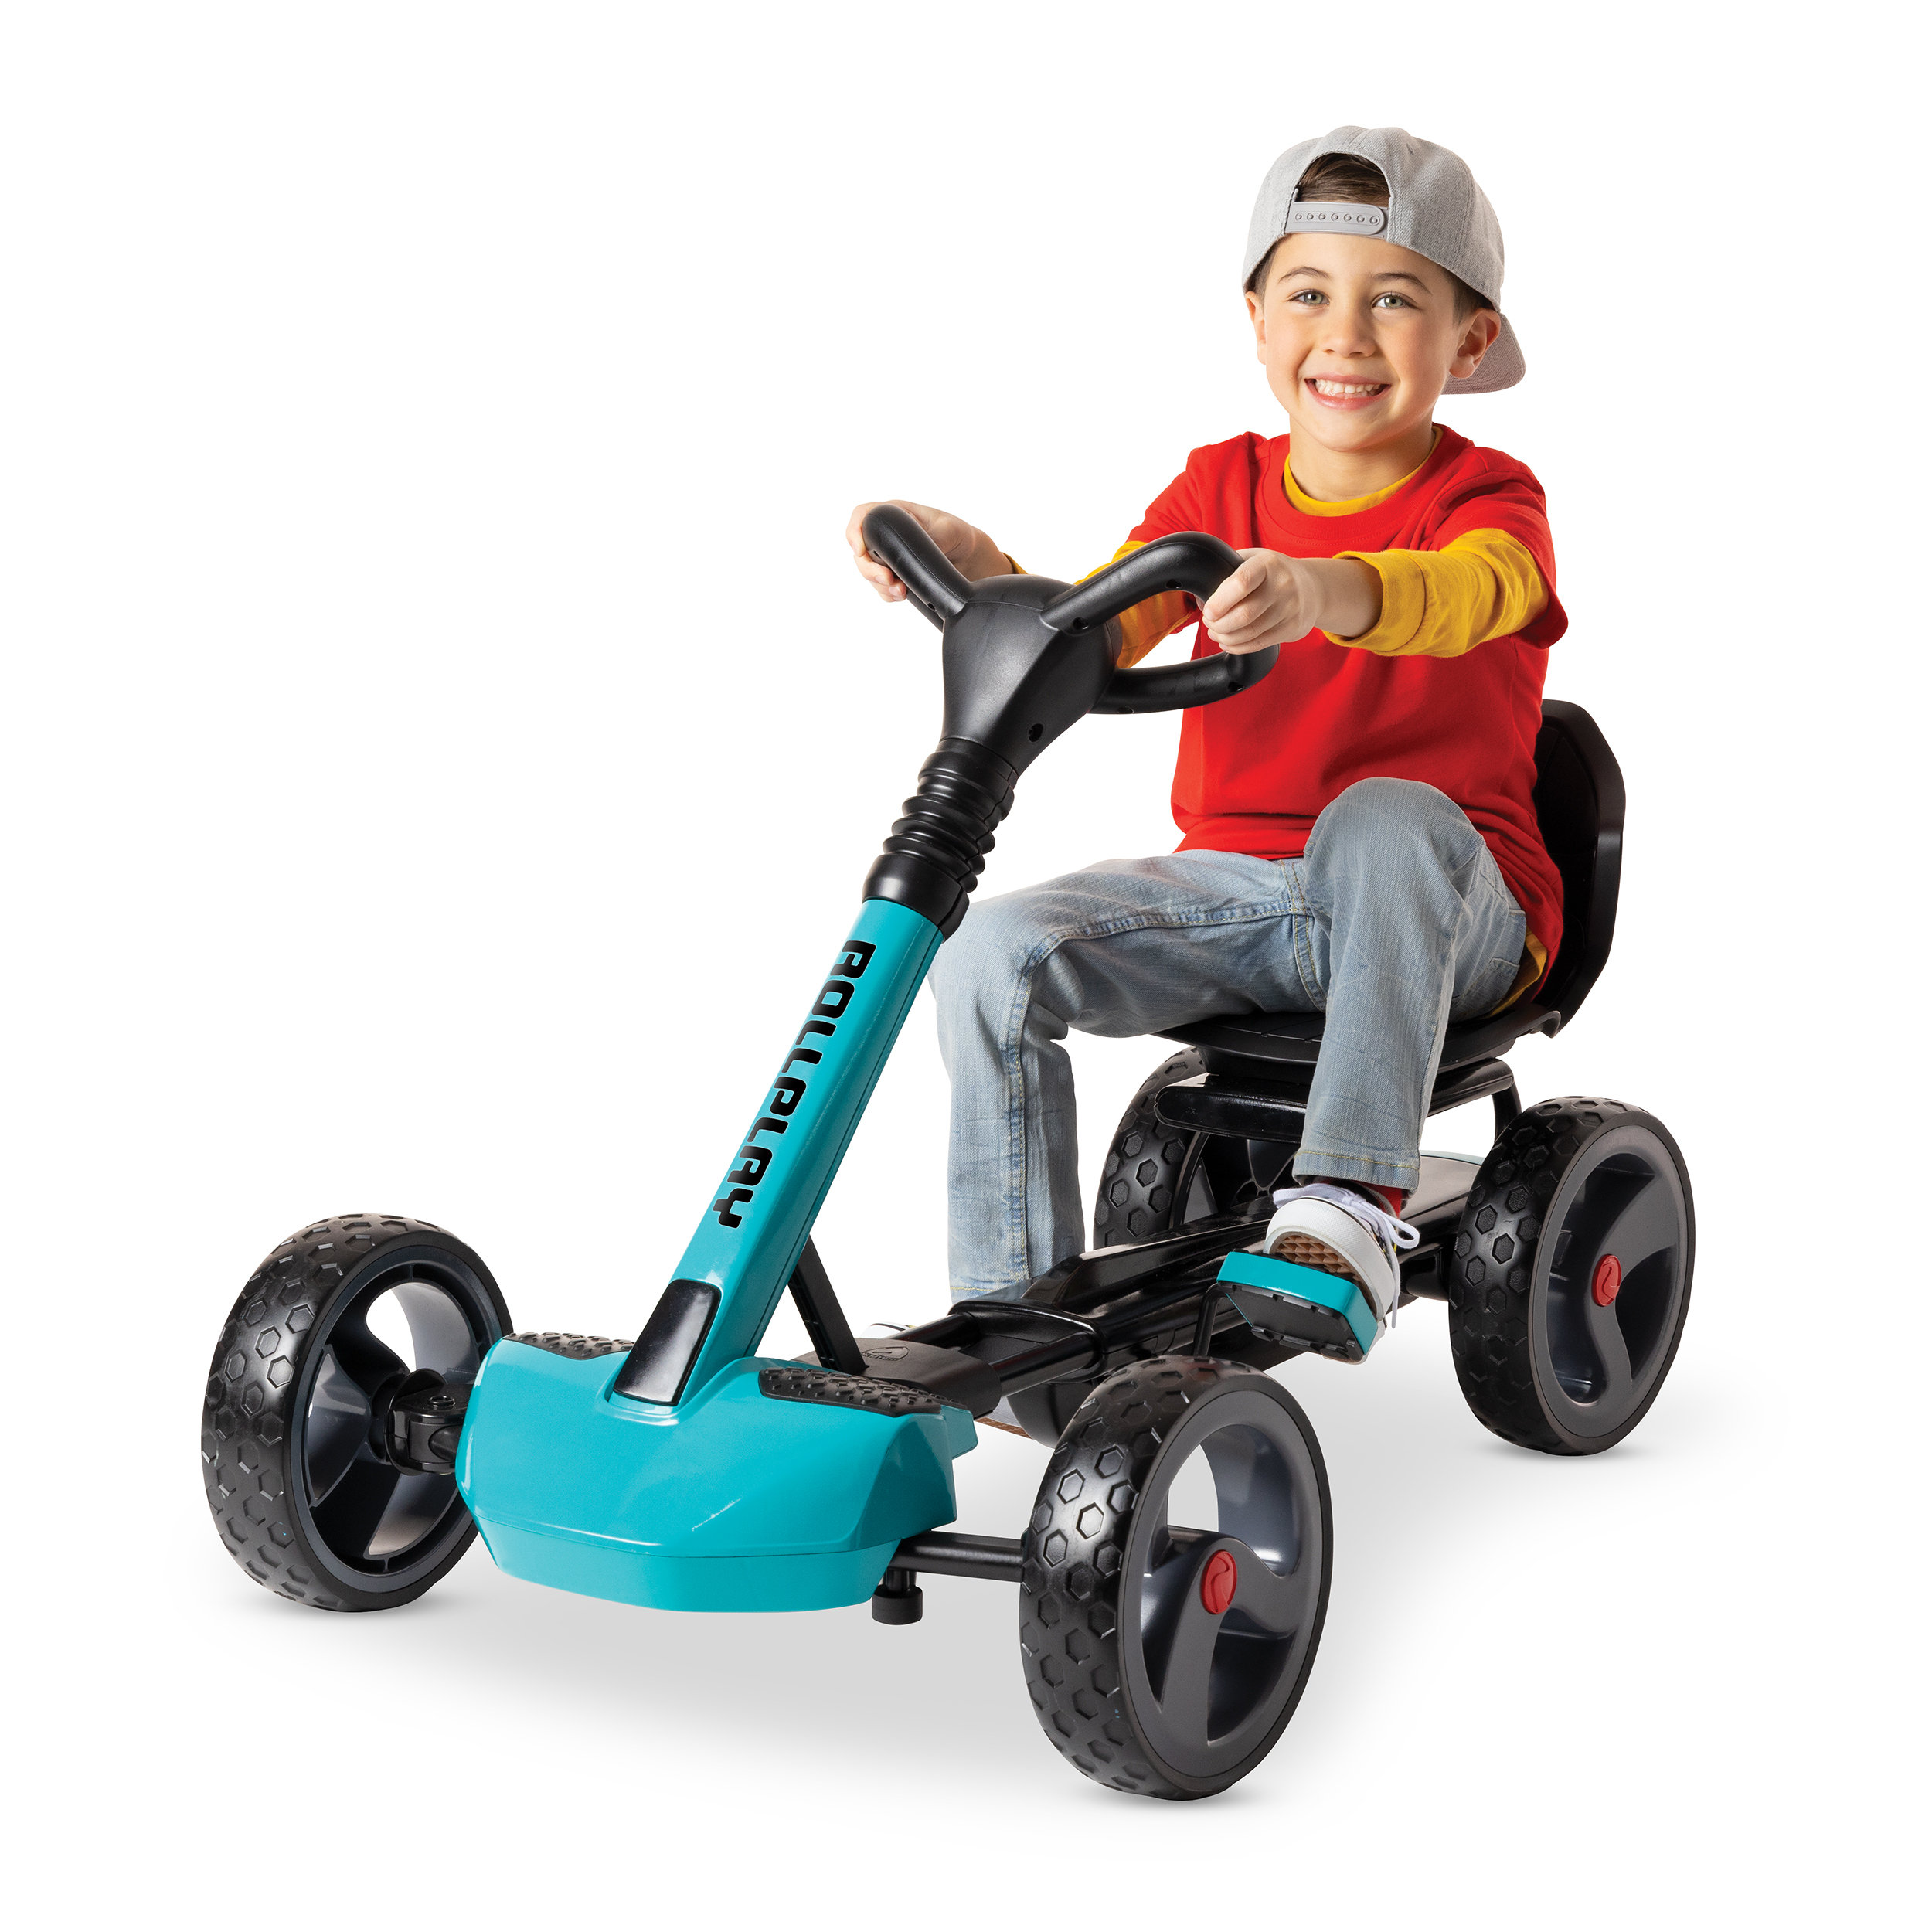 RollPlay Kart XL Ride-On Toy & Reviews | Wayfair